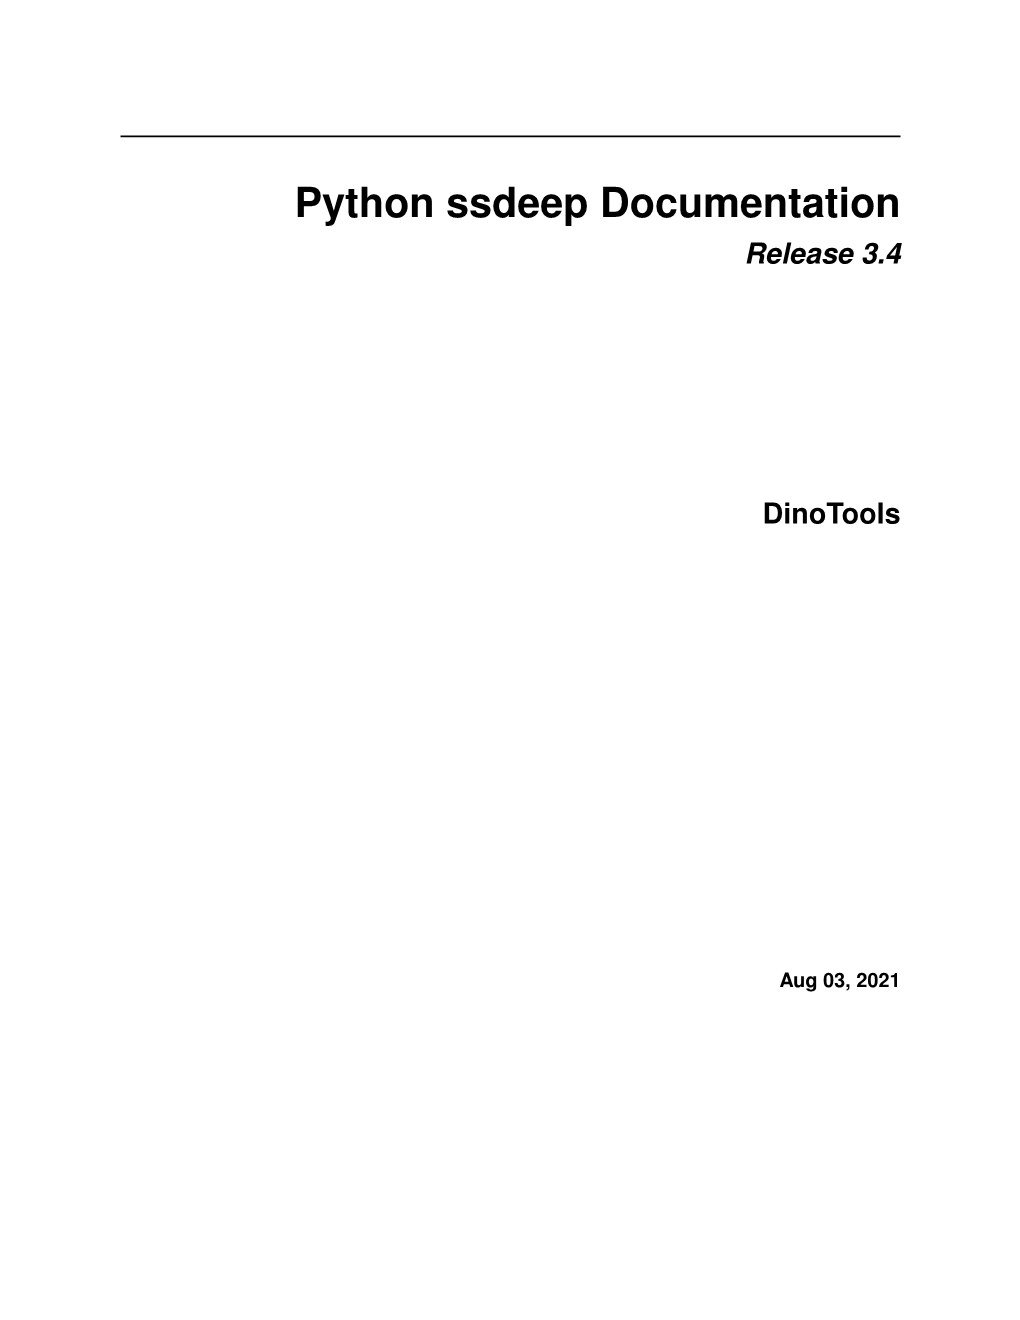 Python Ssdeep Documentation Release 3.4